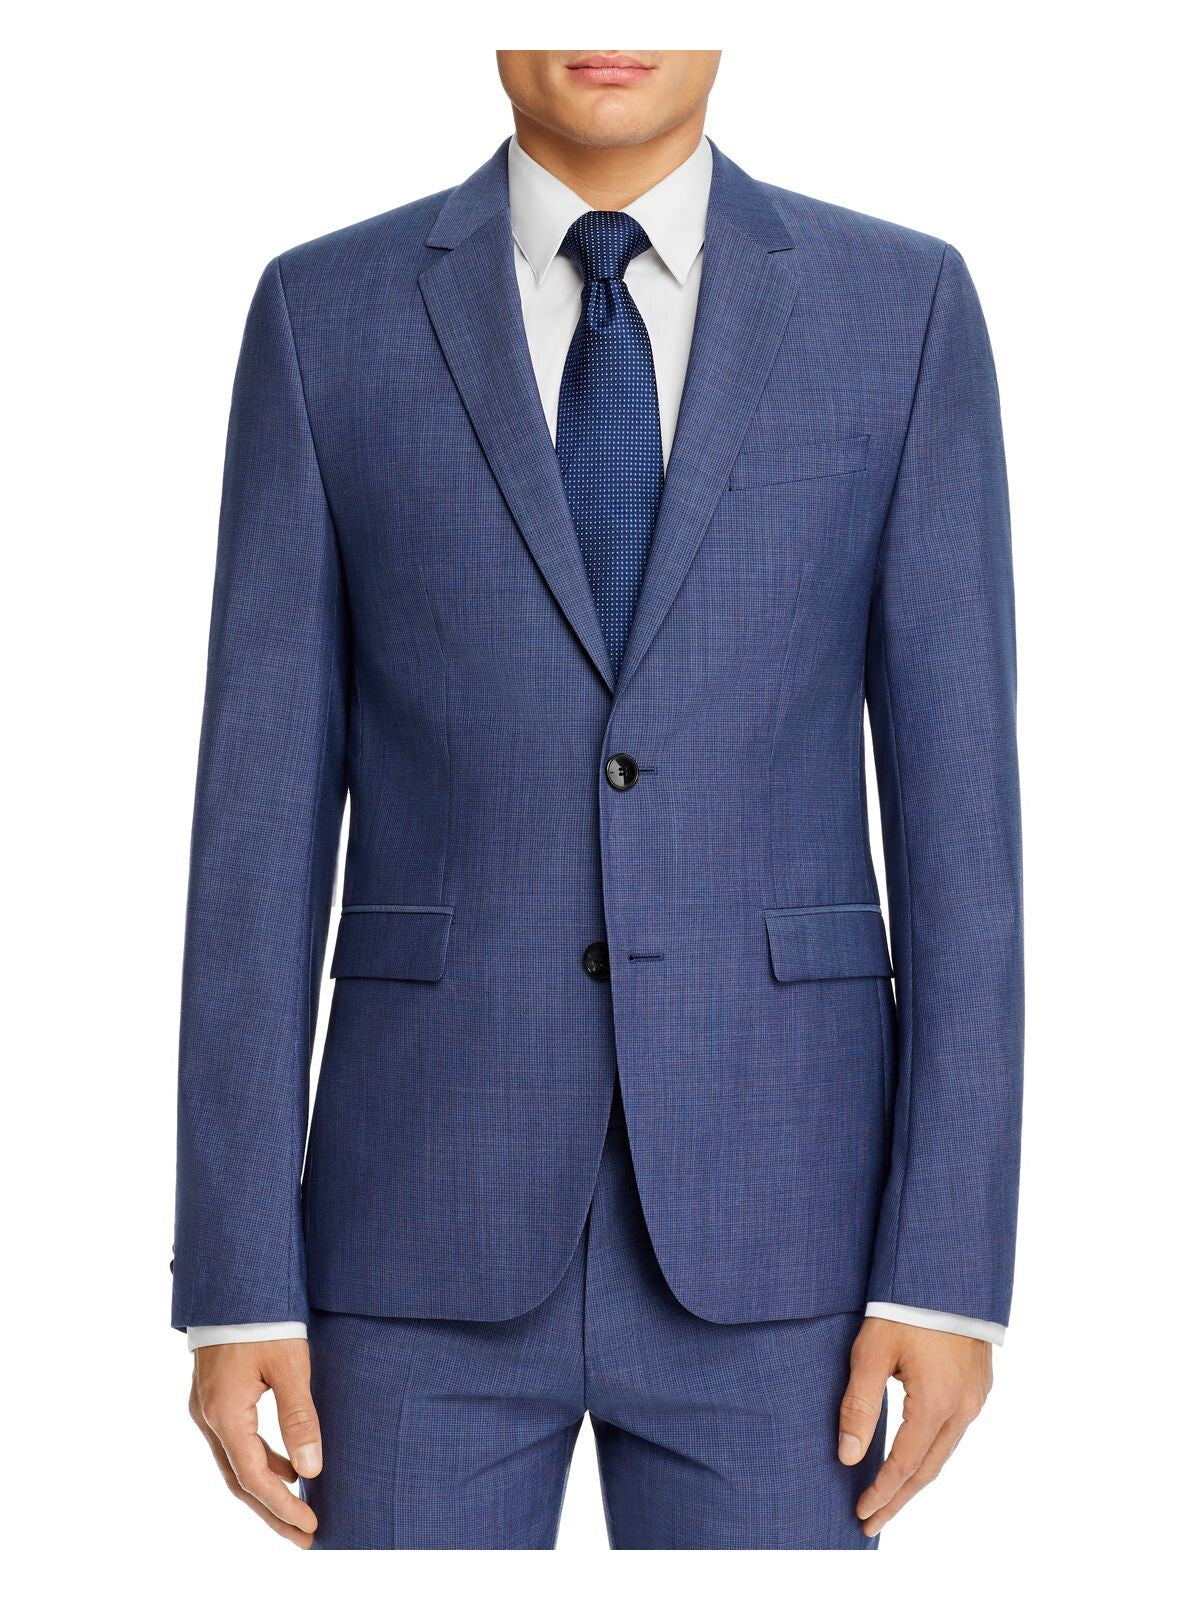 HUGO BOSS Mens Blue Single Breasted, Wool Blend Suit Jacket 38R